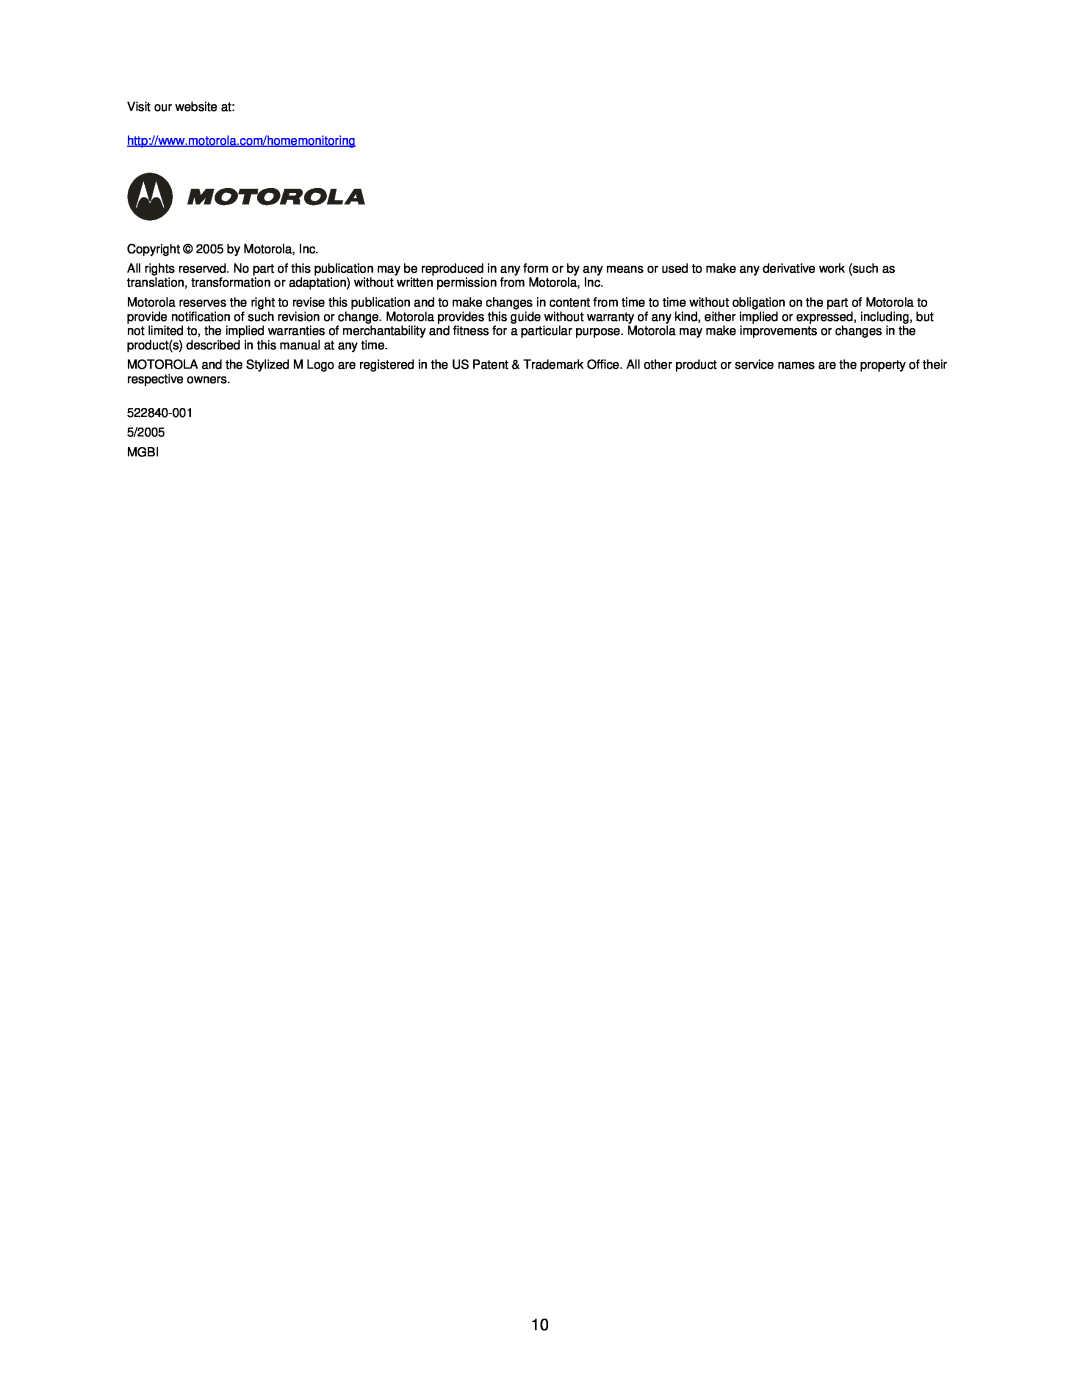 Motorola HMVC3050 manual Visit our website at 